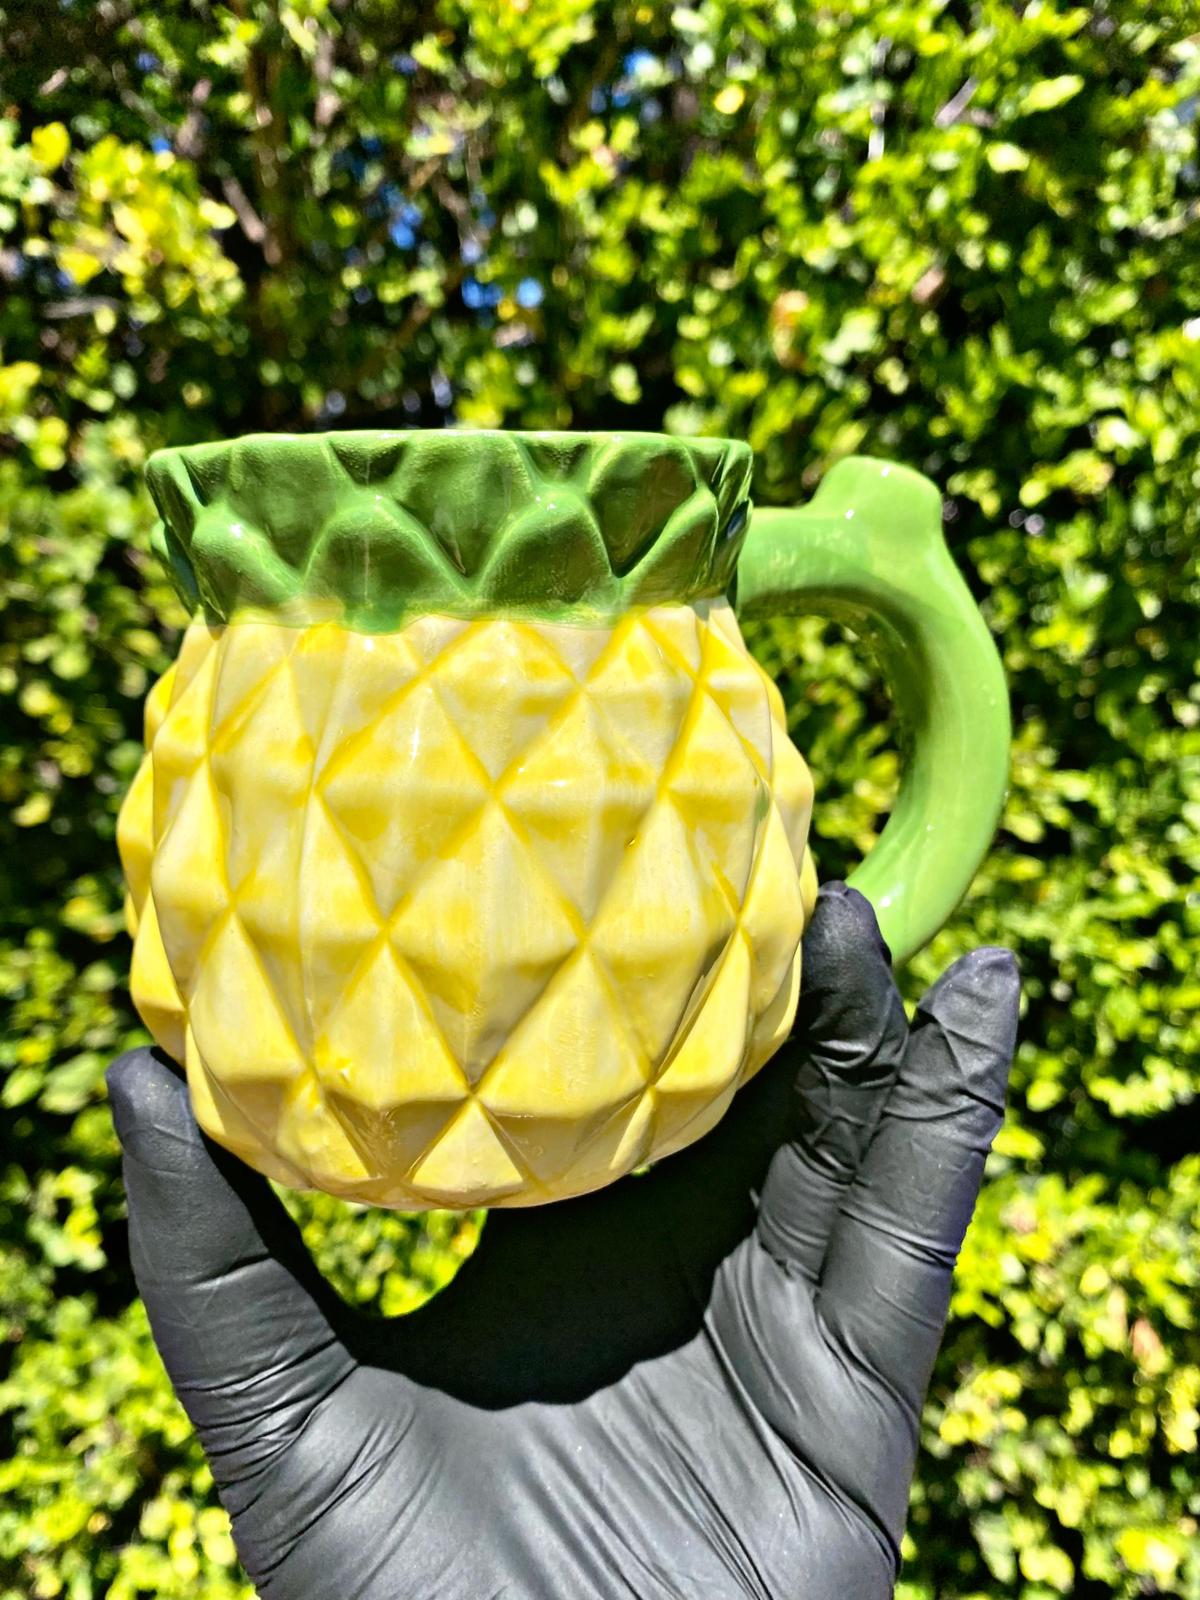 Pineapple Ceramic Mug